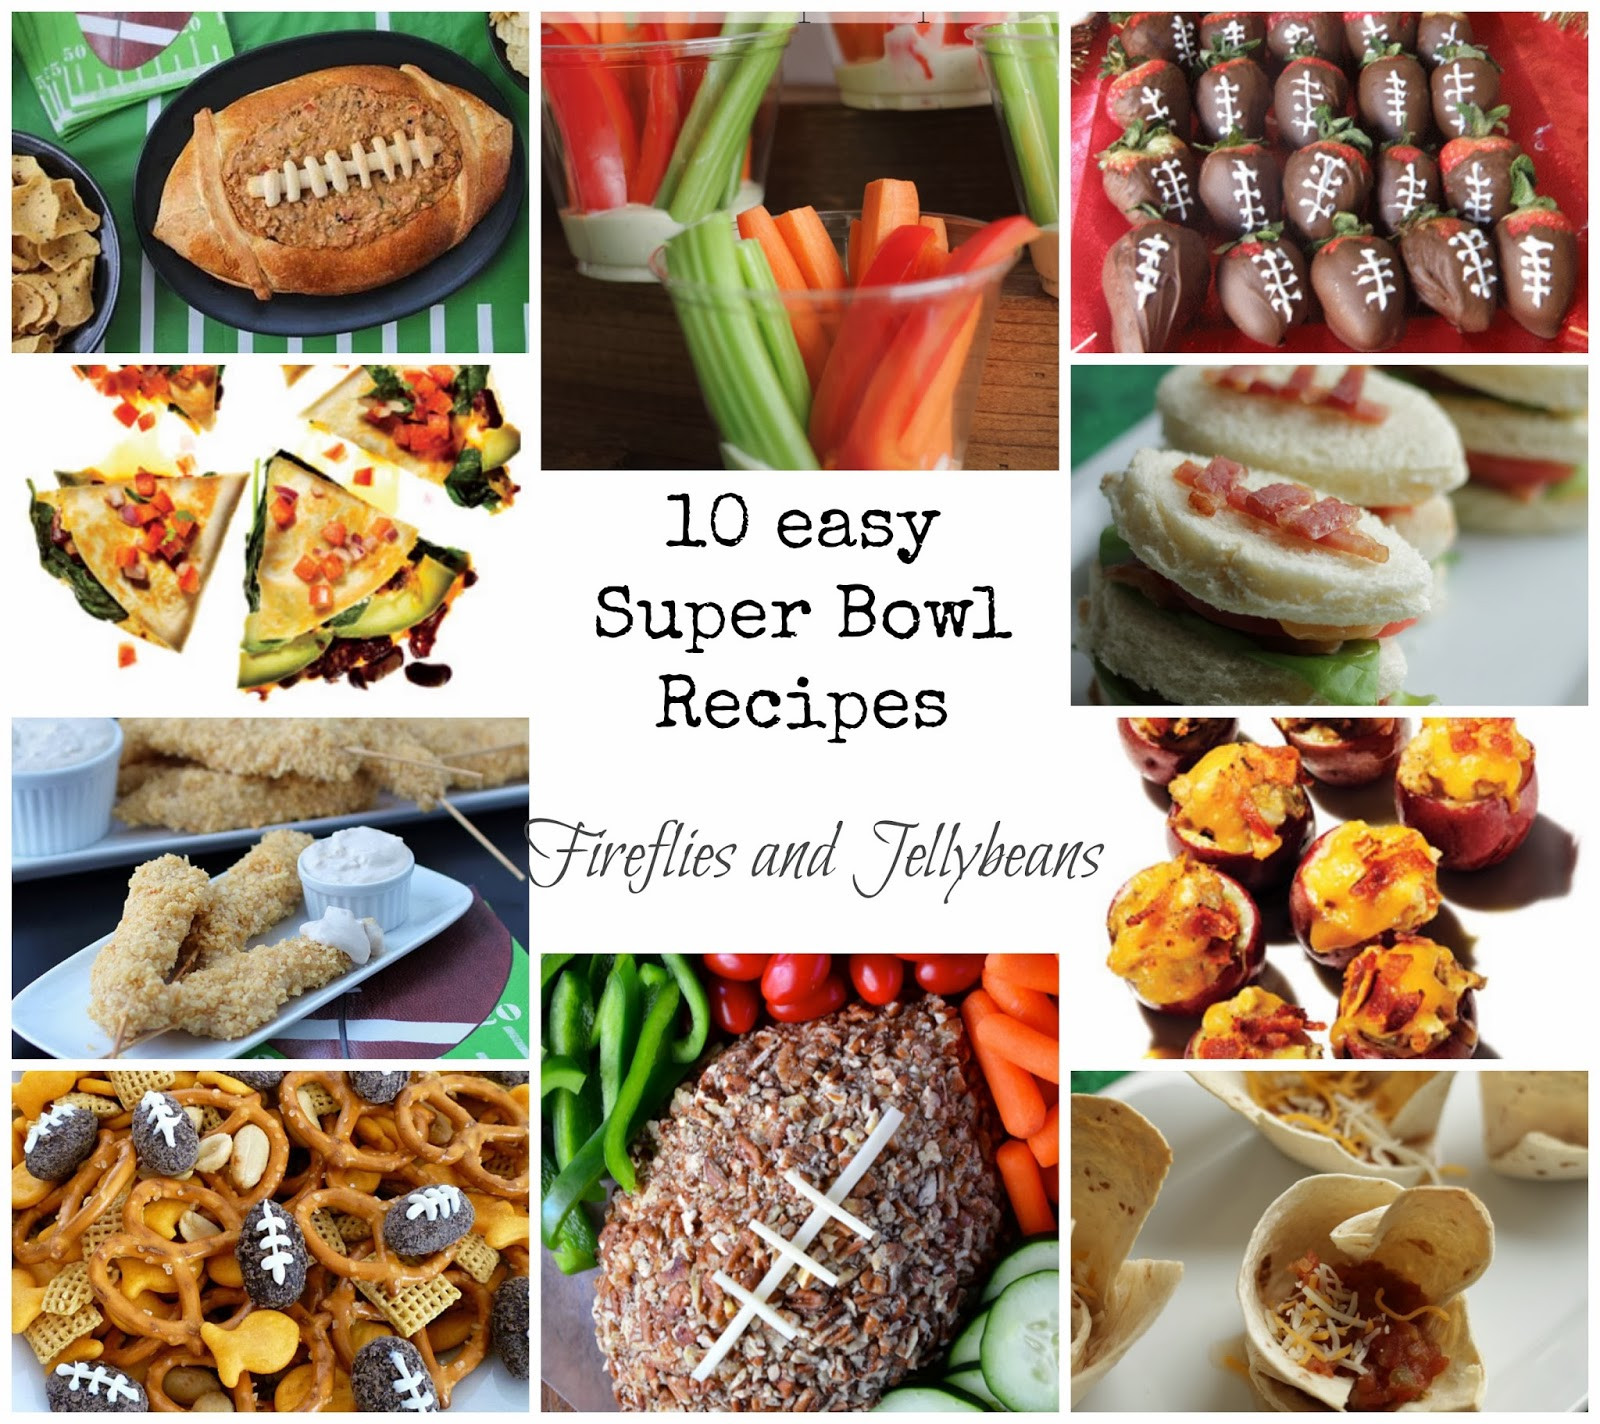 Super Bowl Easy Recipes
 Fireflies and Jellybeans 10 Easy Super Bowl Recipes